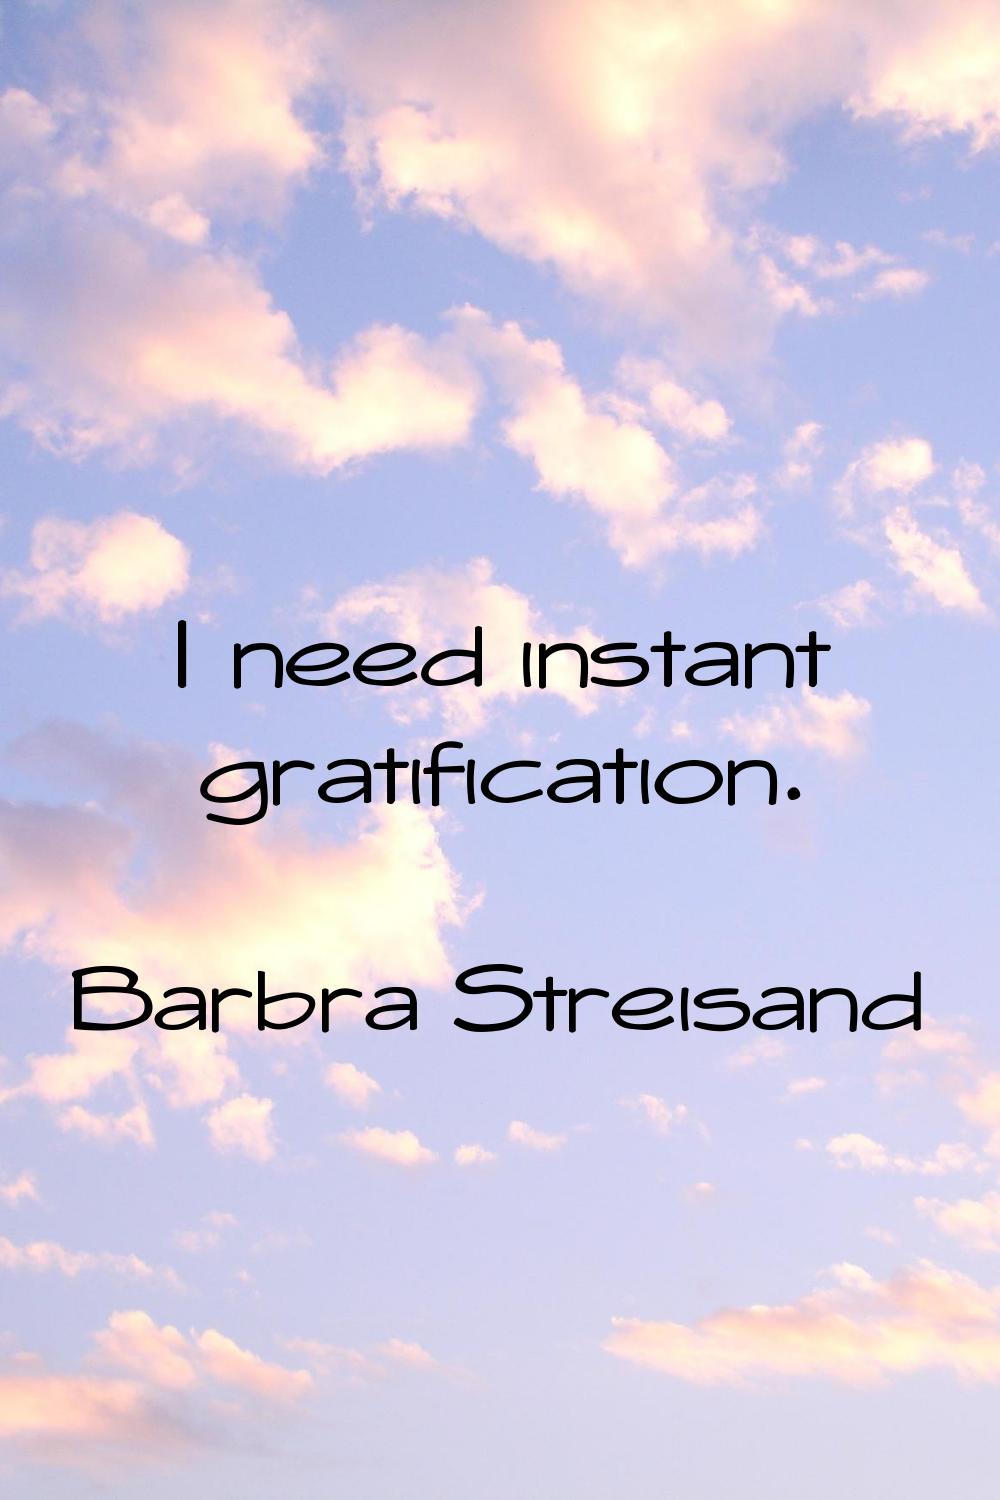 I need instant gratification.